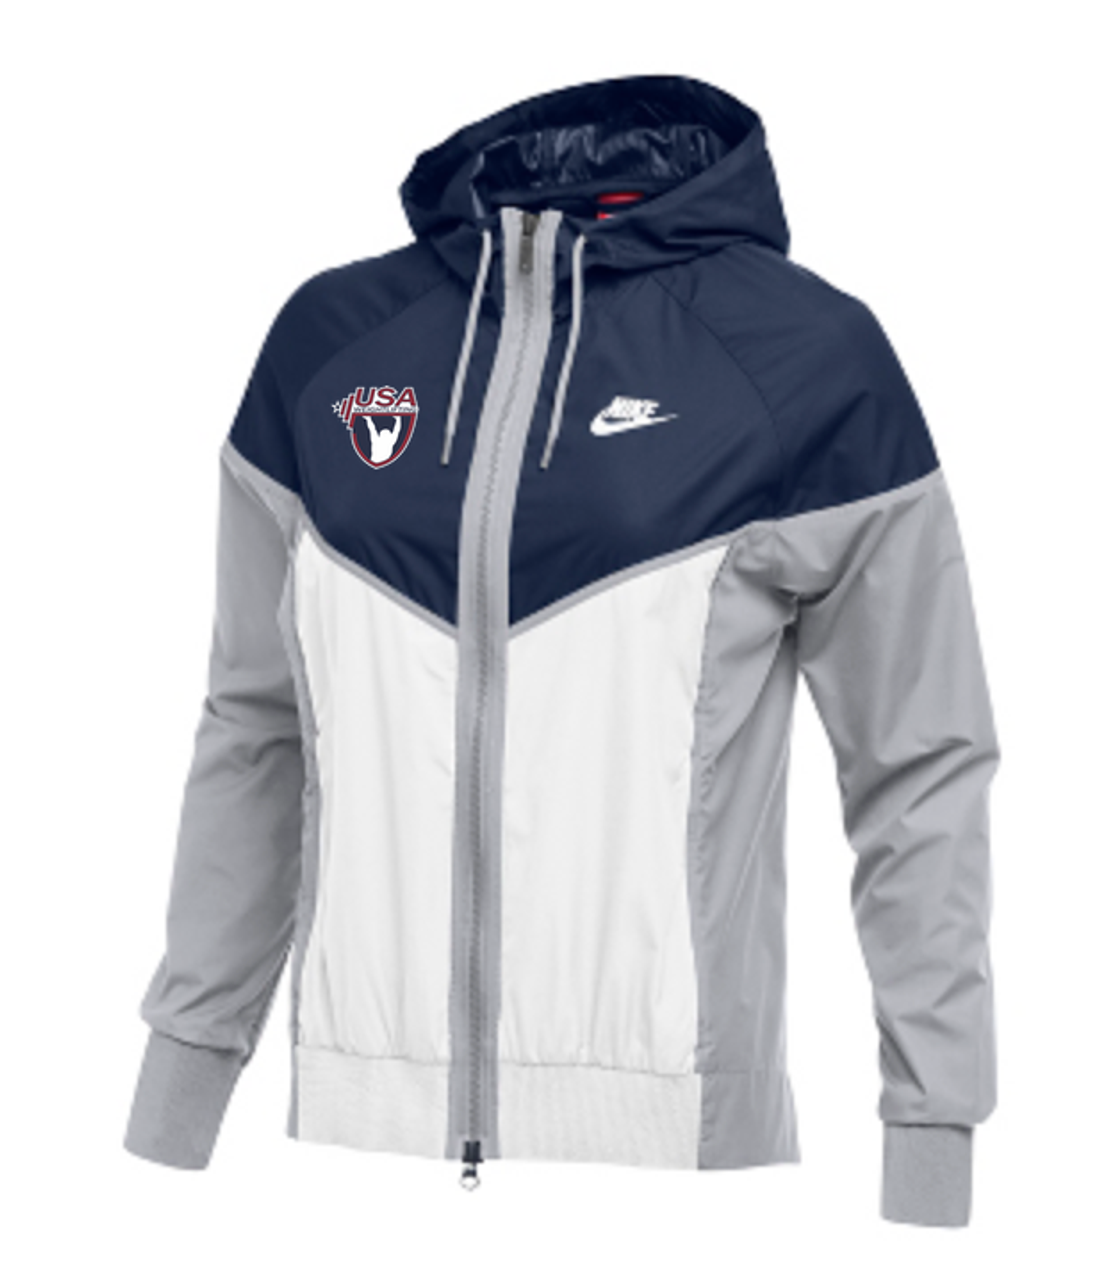 Nike Women's USAW Windrunner Jacket - Navy/White/Grey